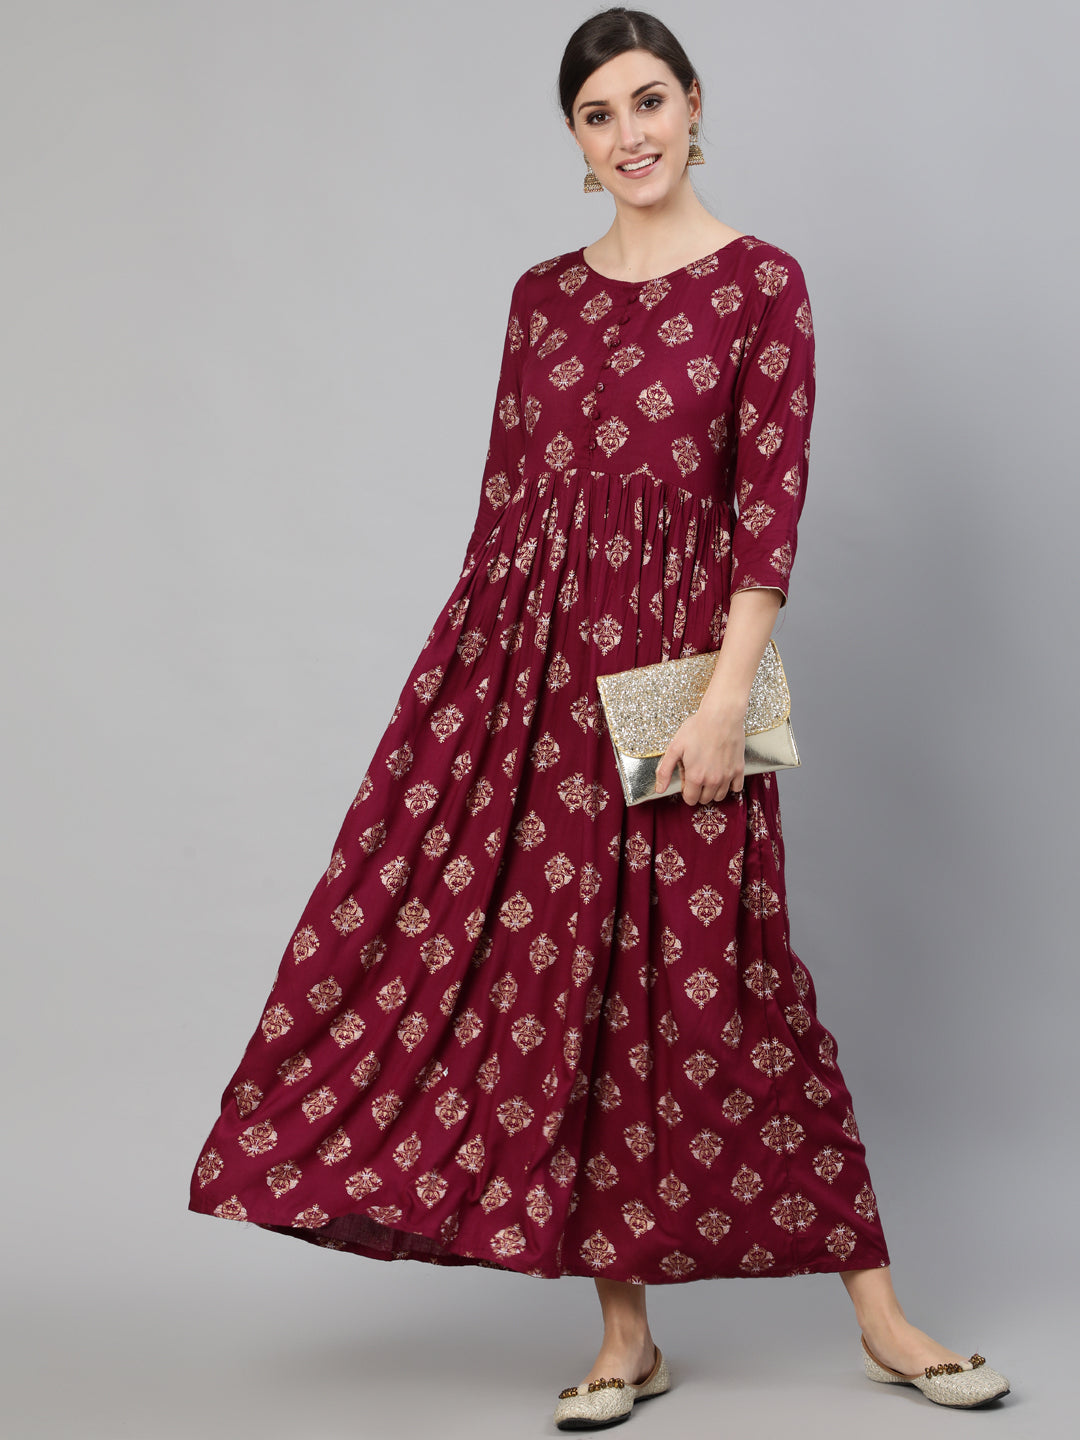 Women's Burgundy Ethnic Printed Dress With Three Quarter Sleeves - Nayo Clothing